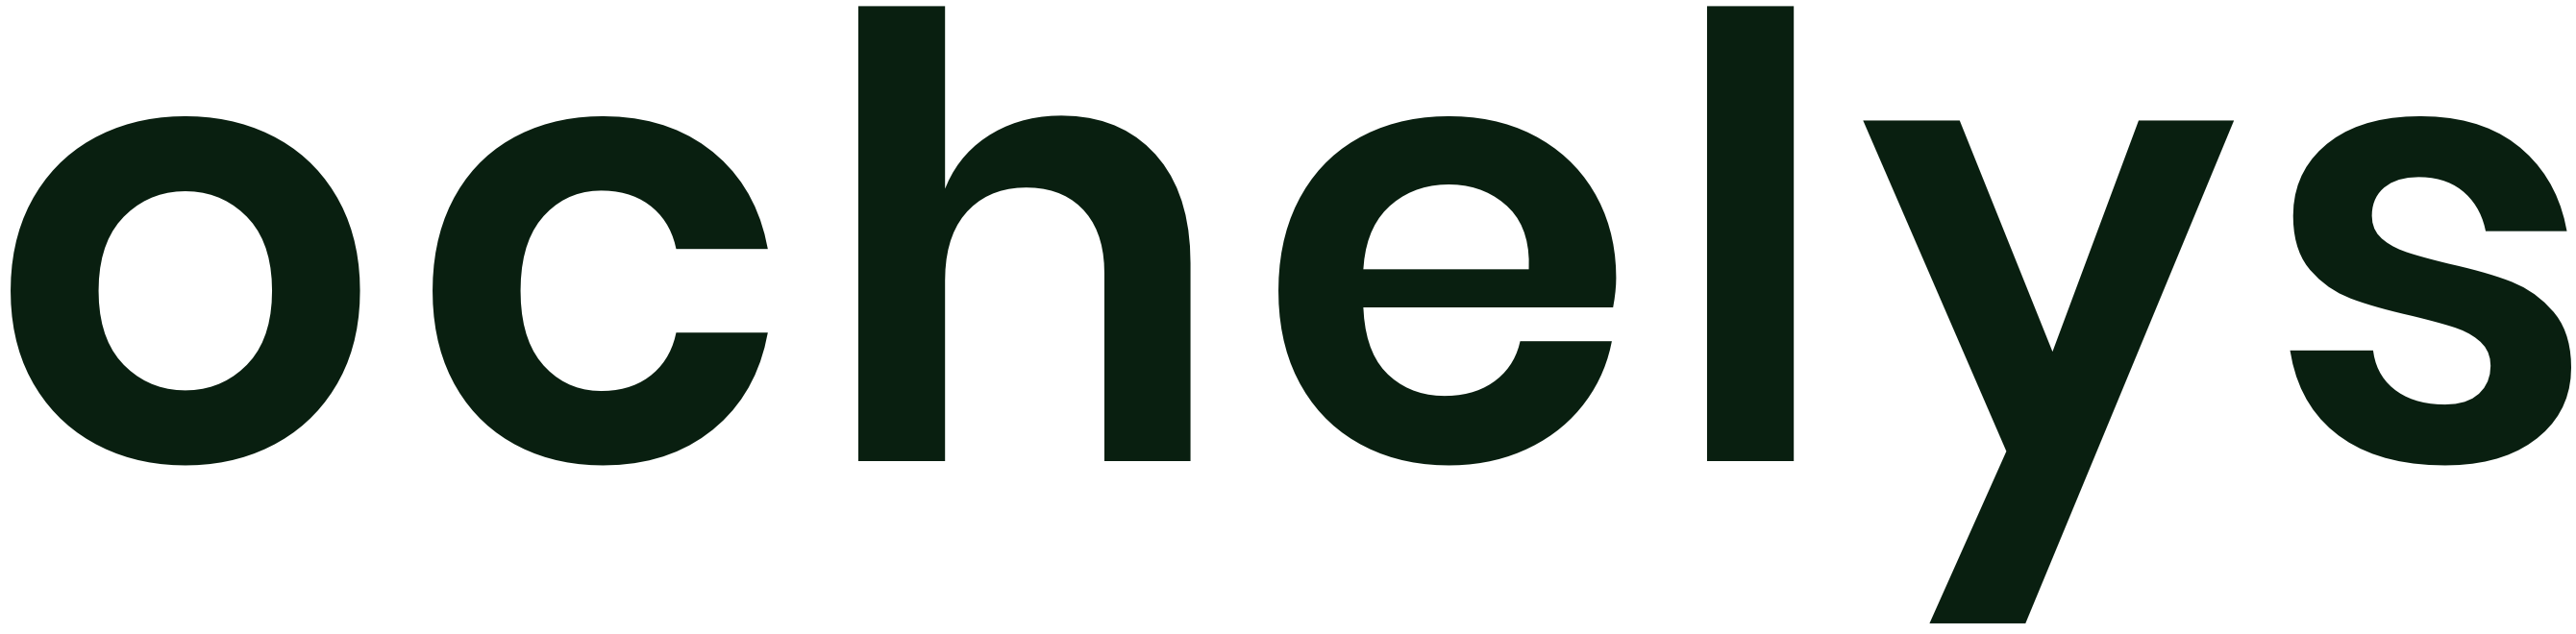 OCHELYS logo